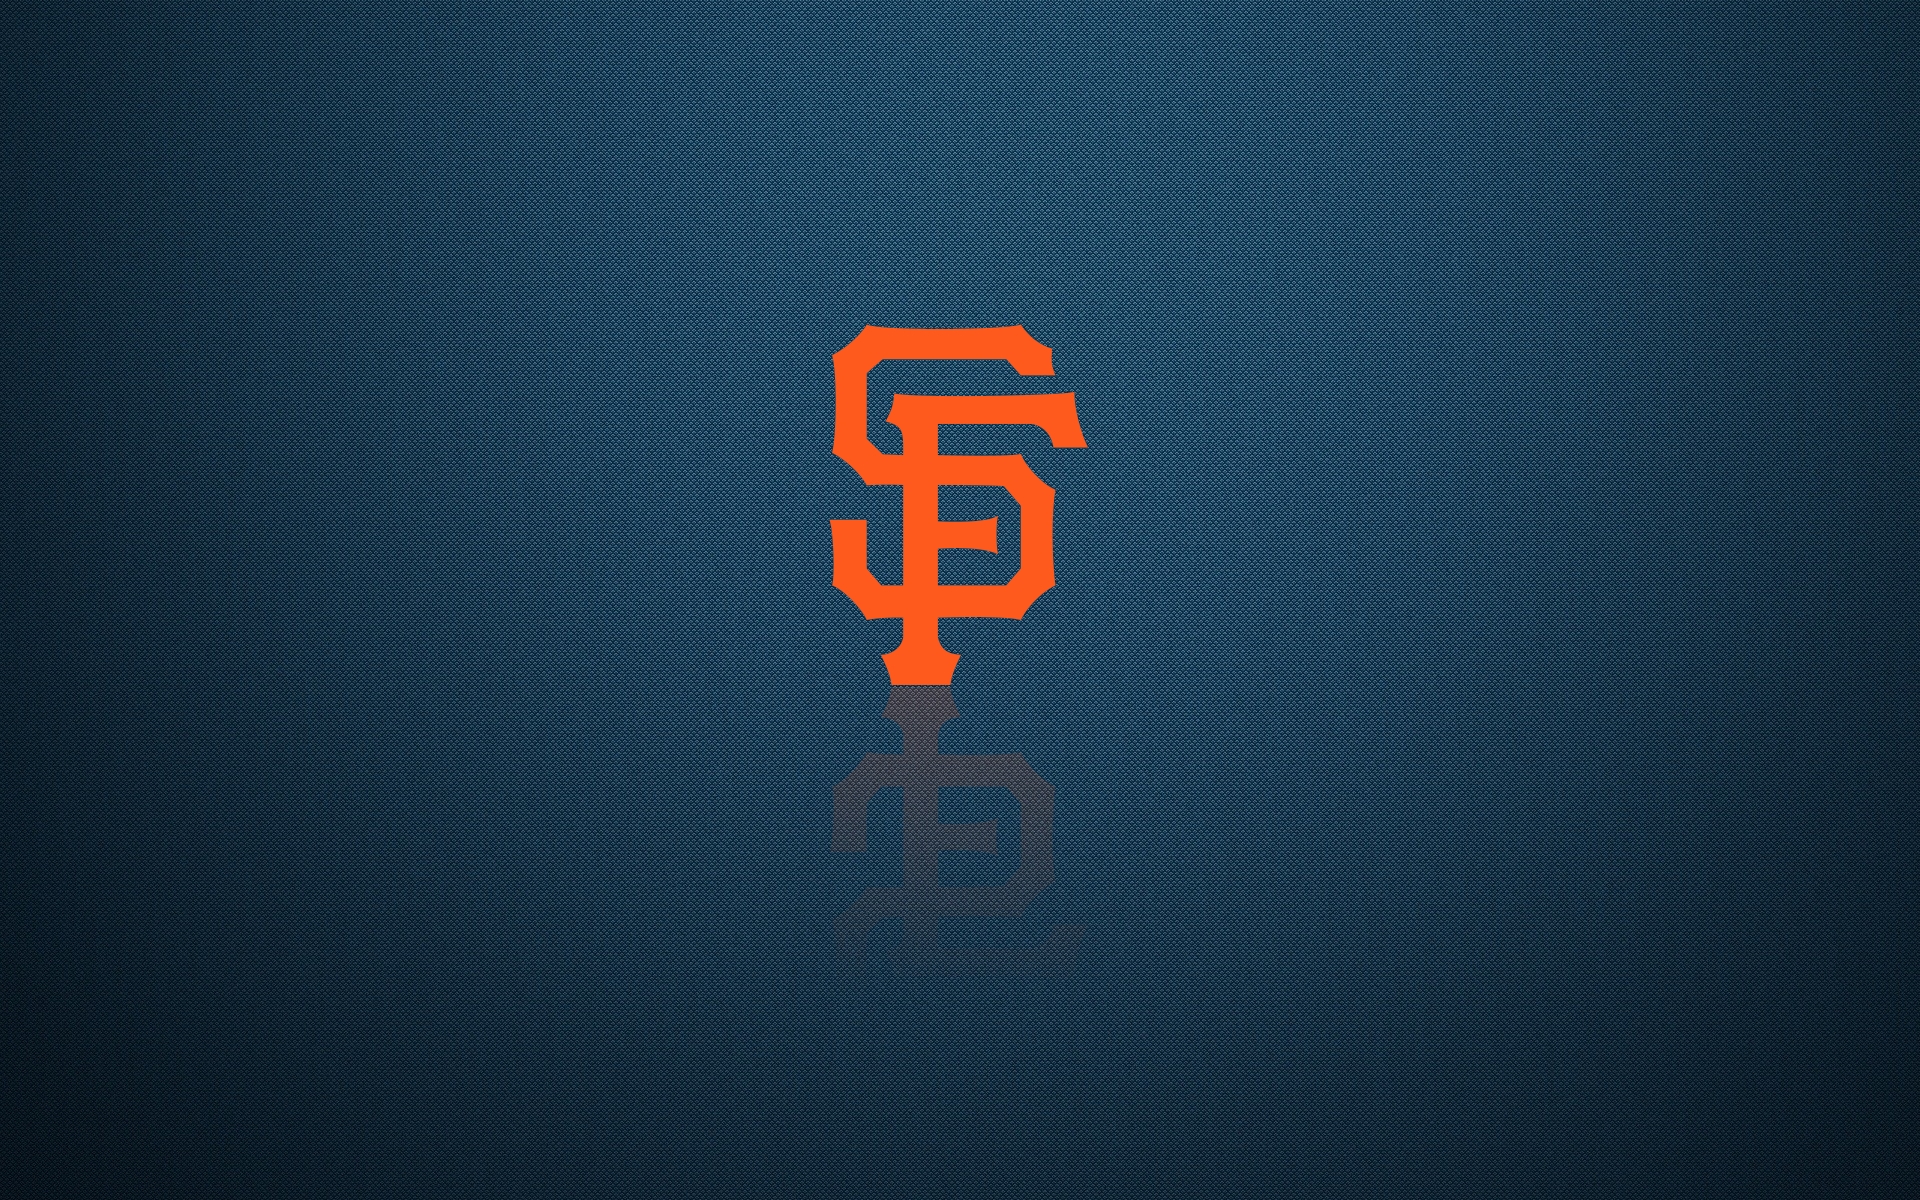 San Francisco Giants Wallpaper Desktop Background 19 10 Logos Download